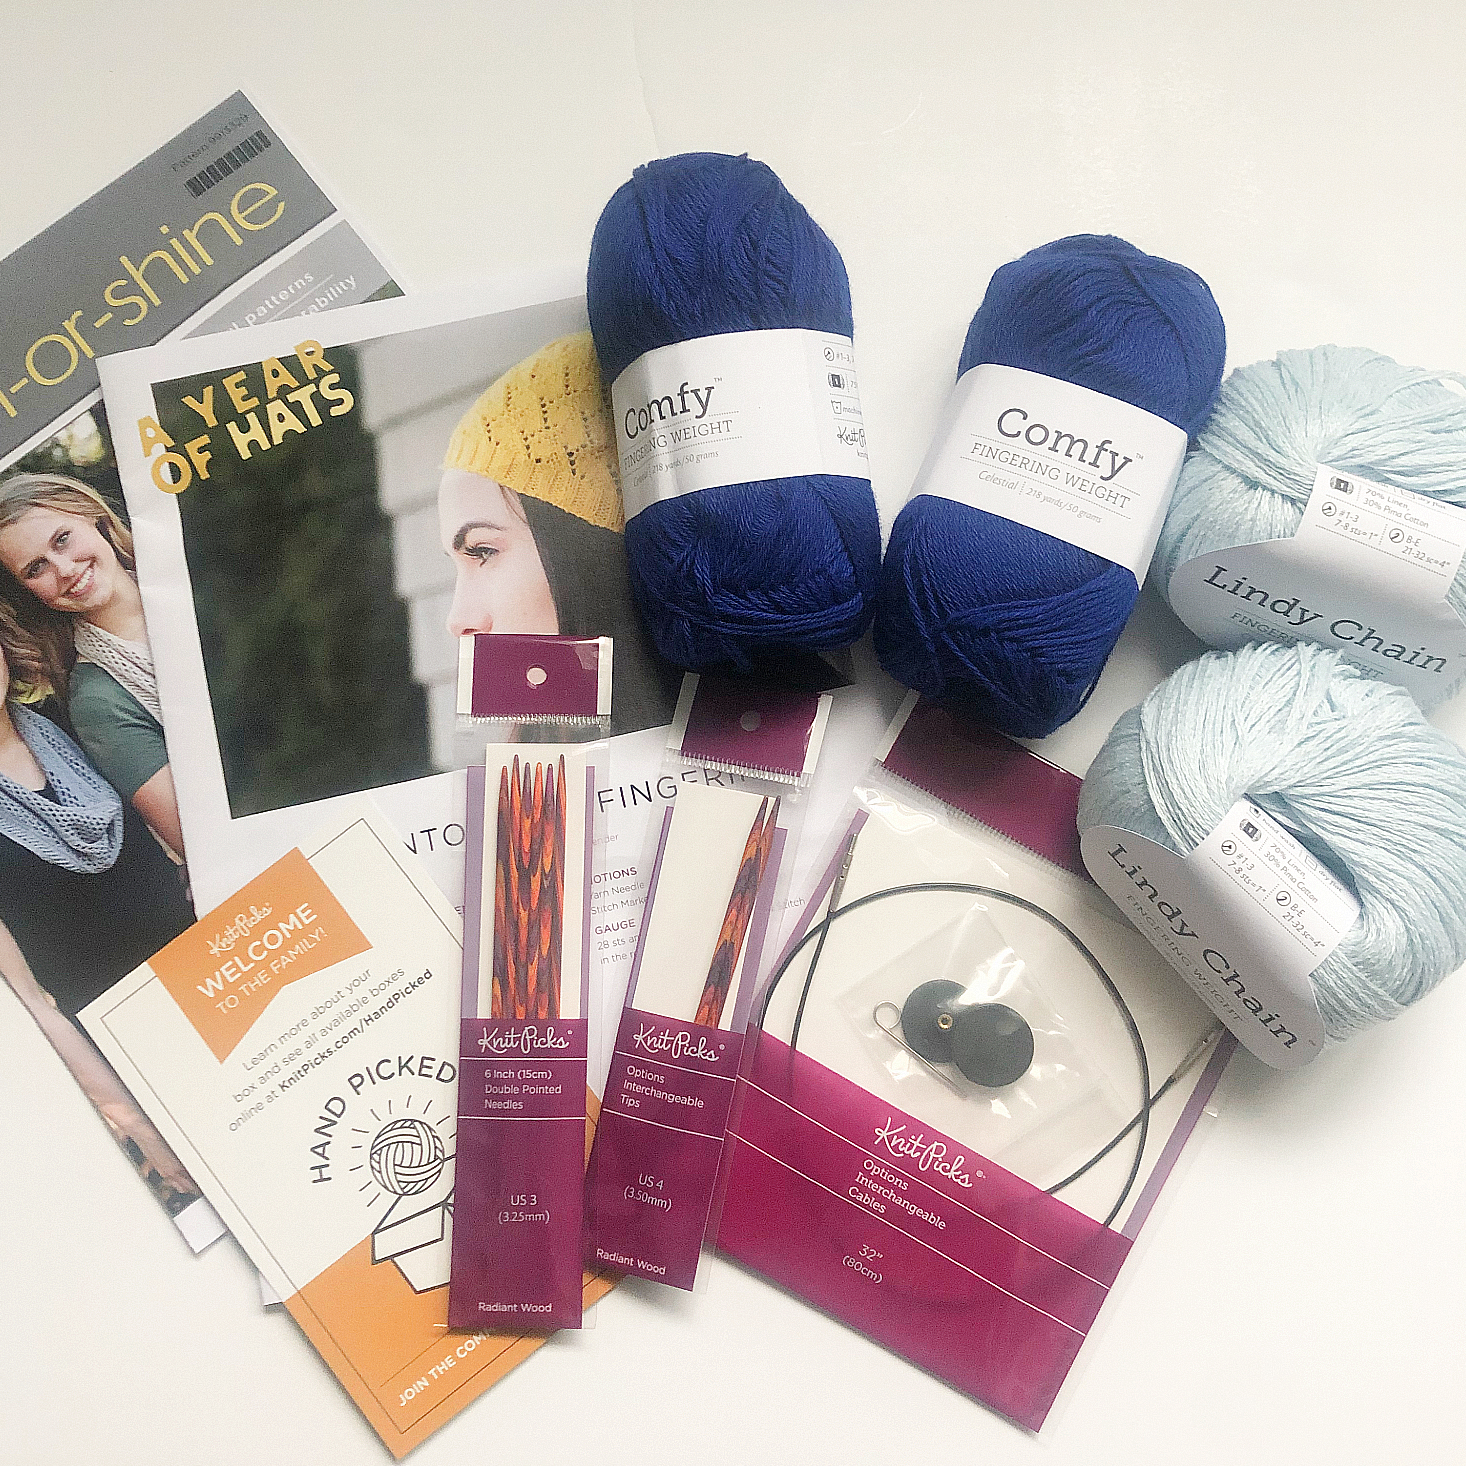 Knit Picks “Cotton Club” Box Review – September 2020